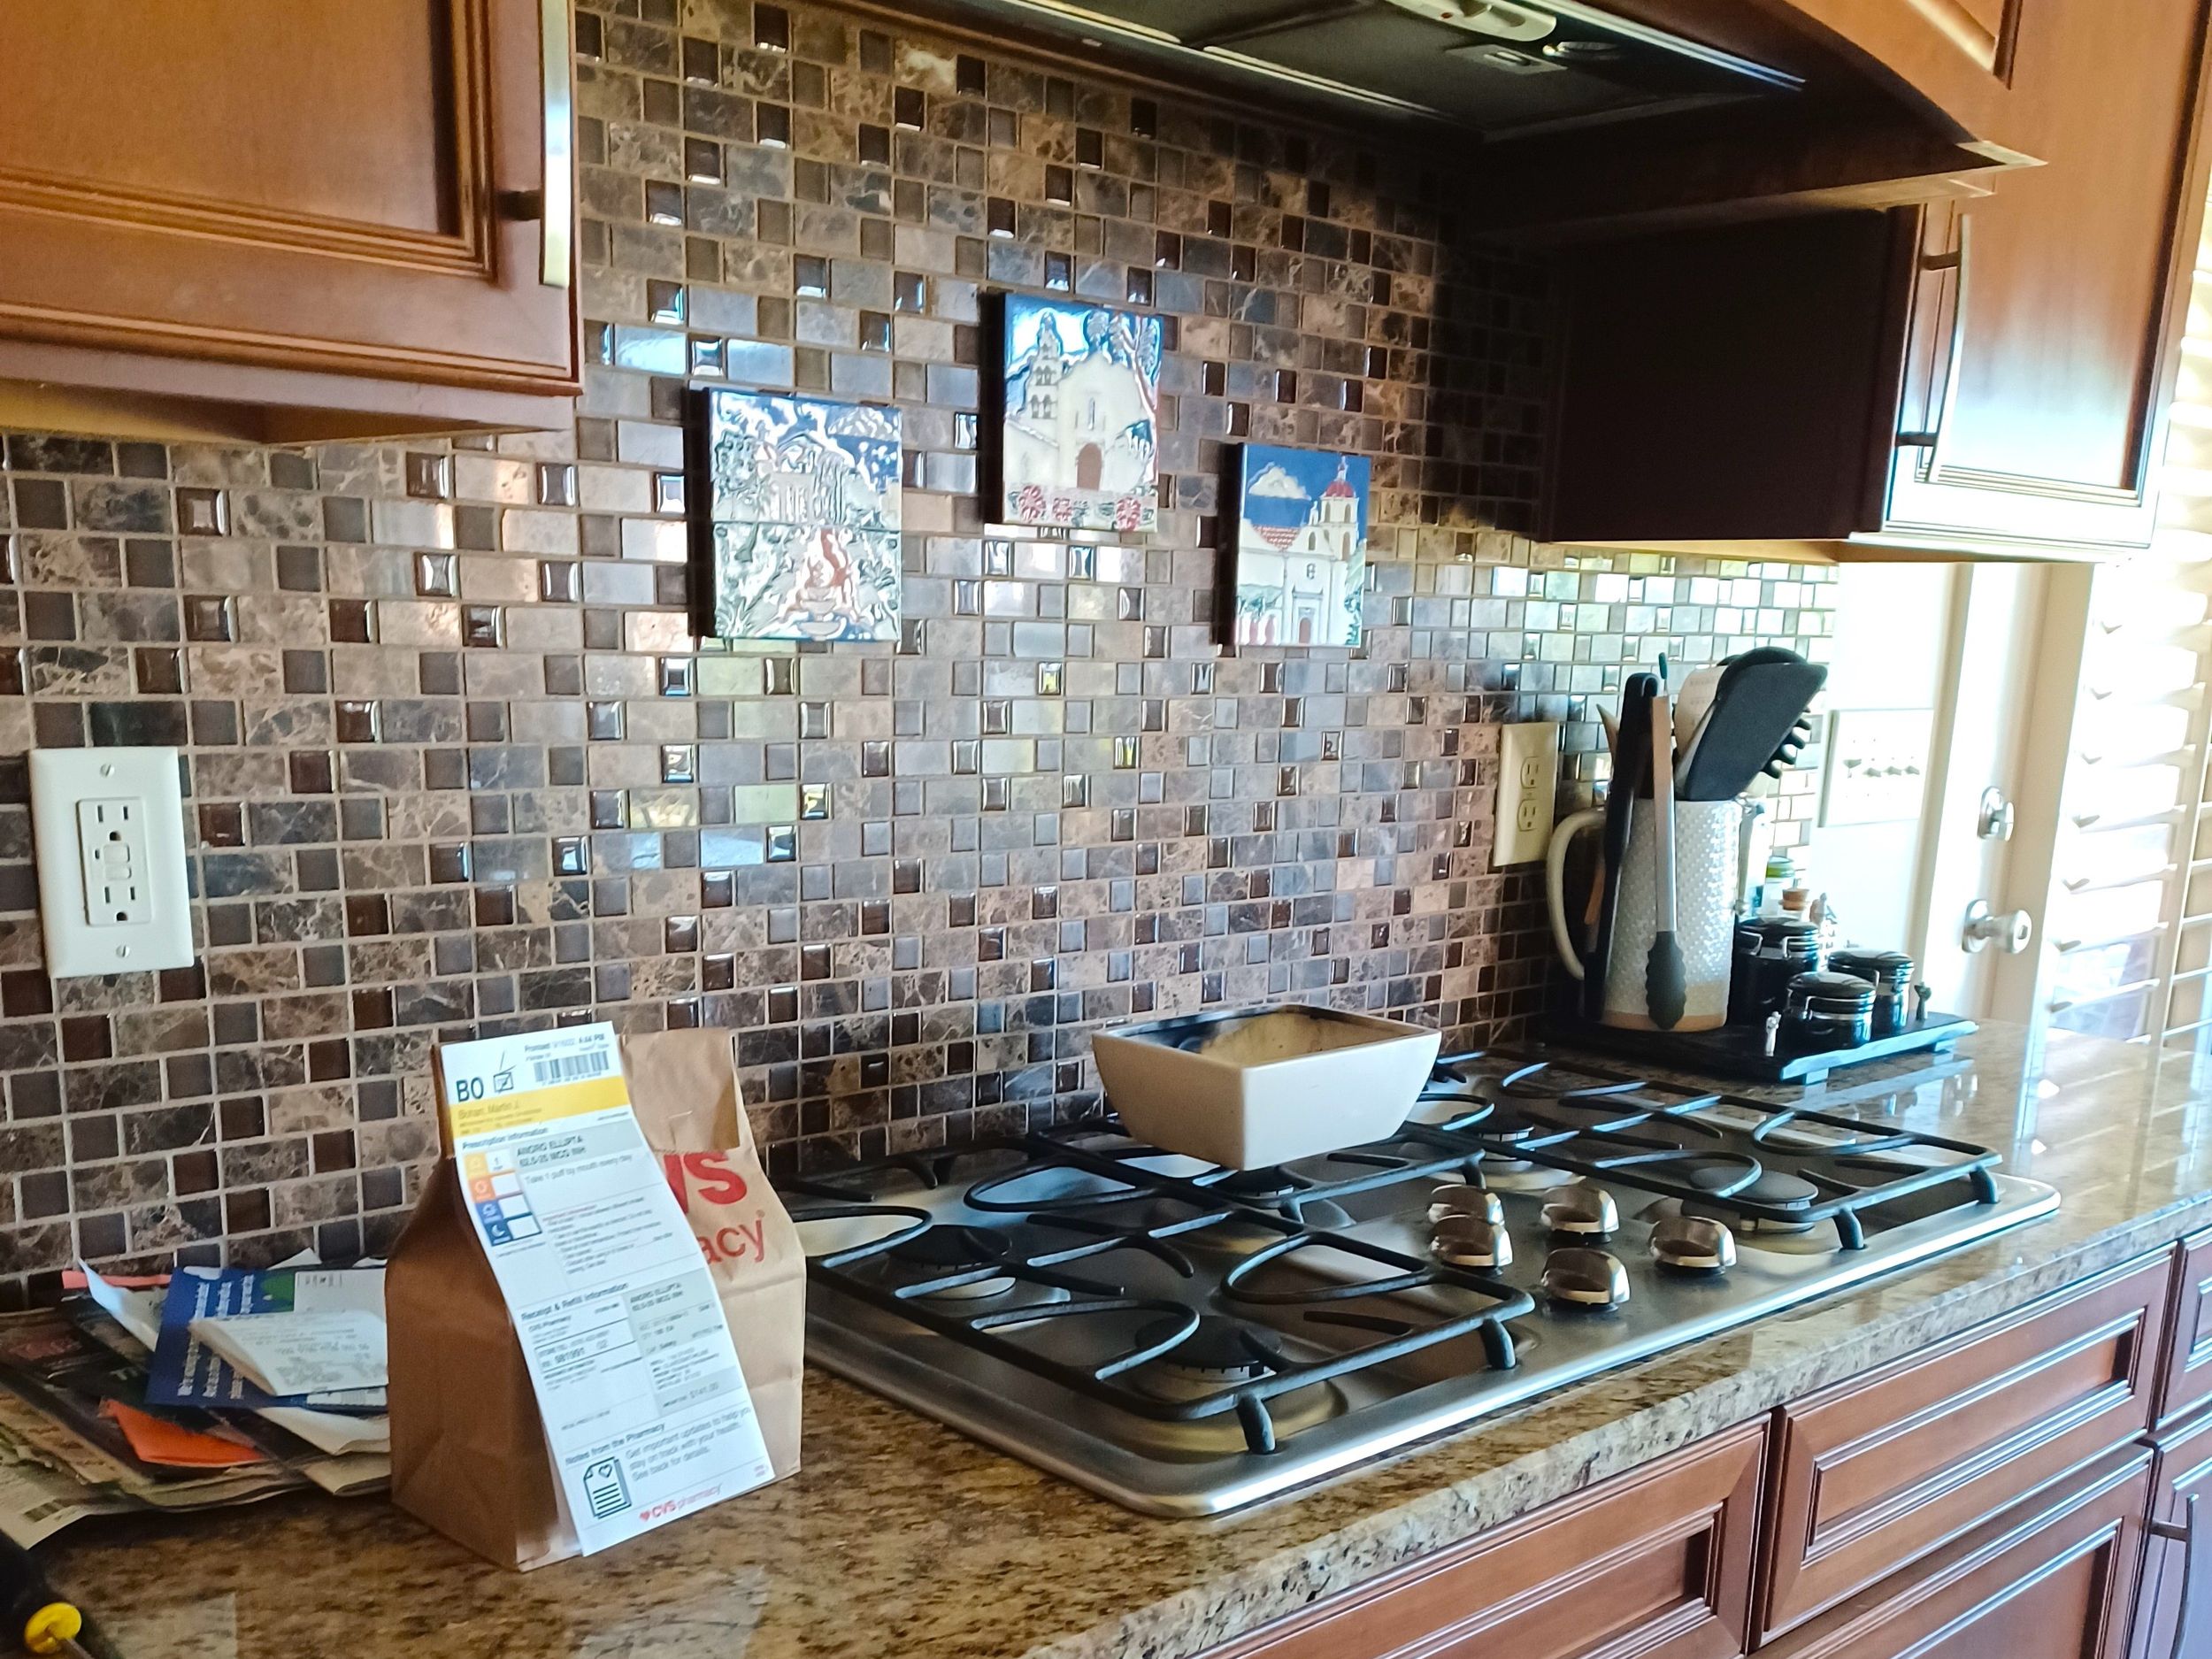 4 Things To Consider When Choosing a Kitchen Backsplash Tile